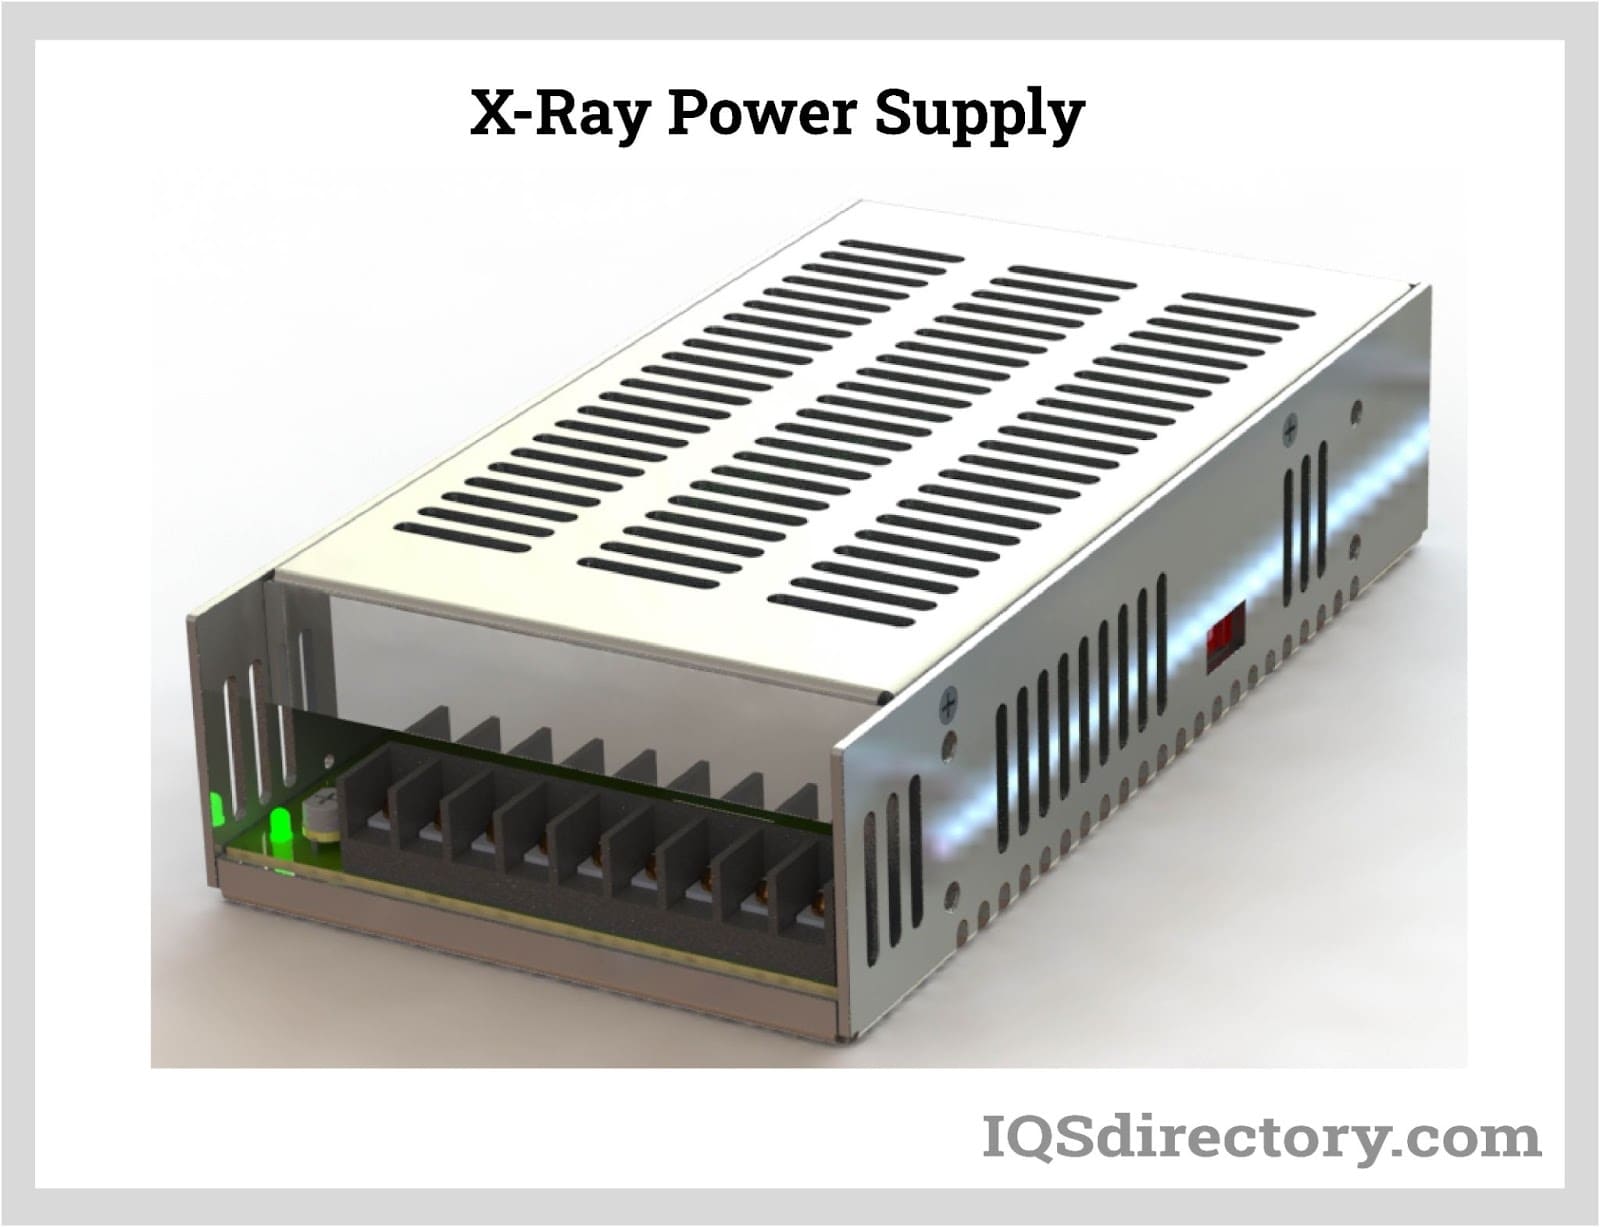 X-Ray Power Supply